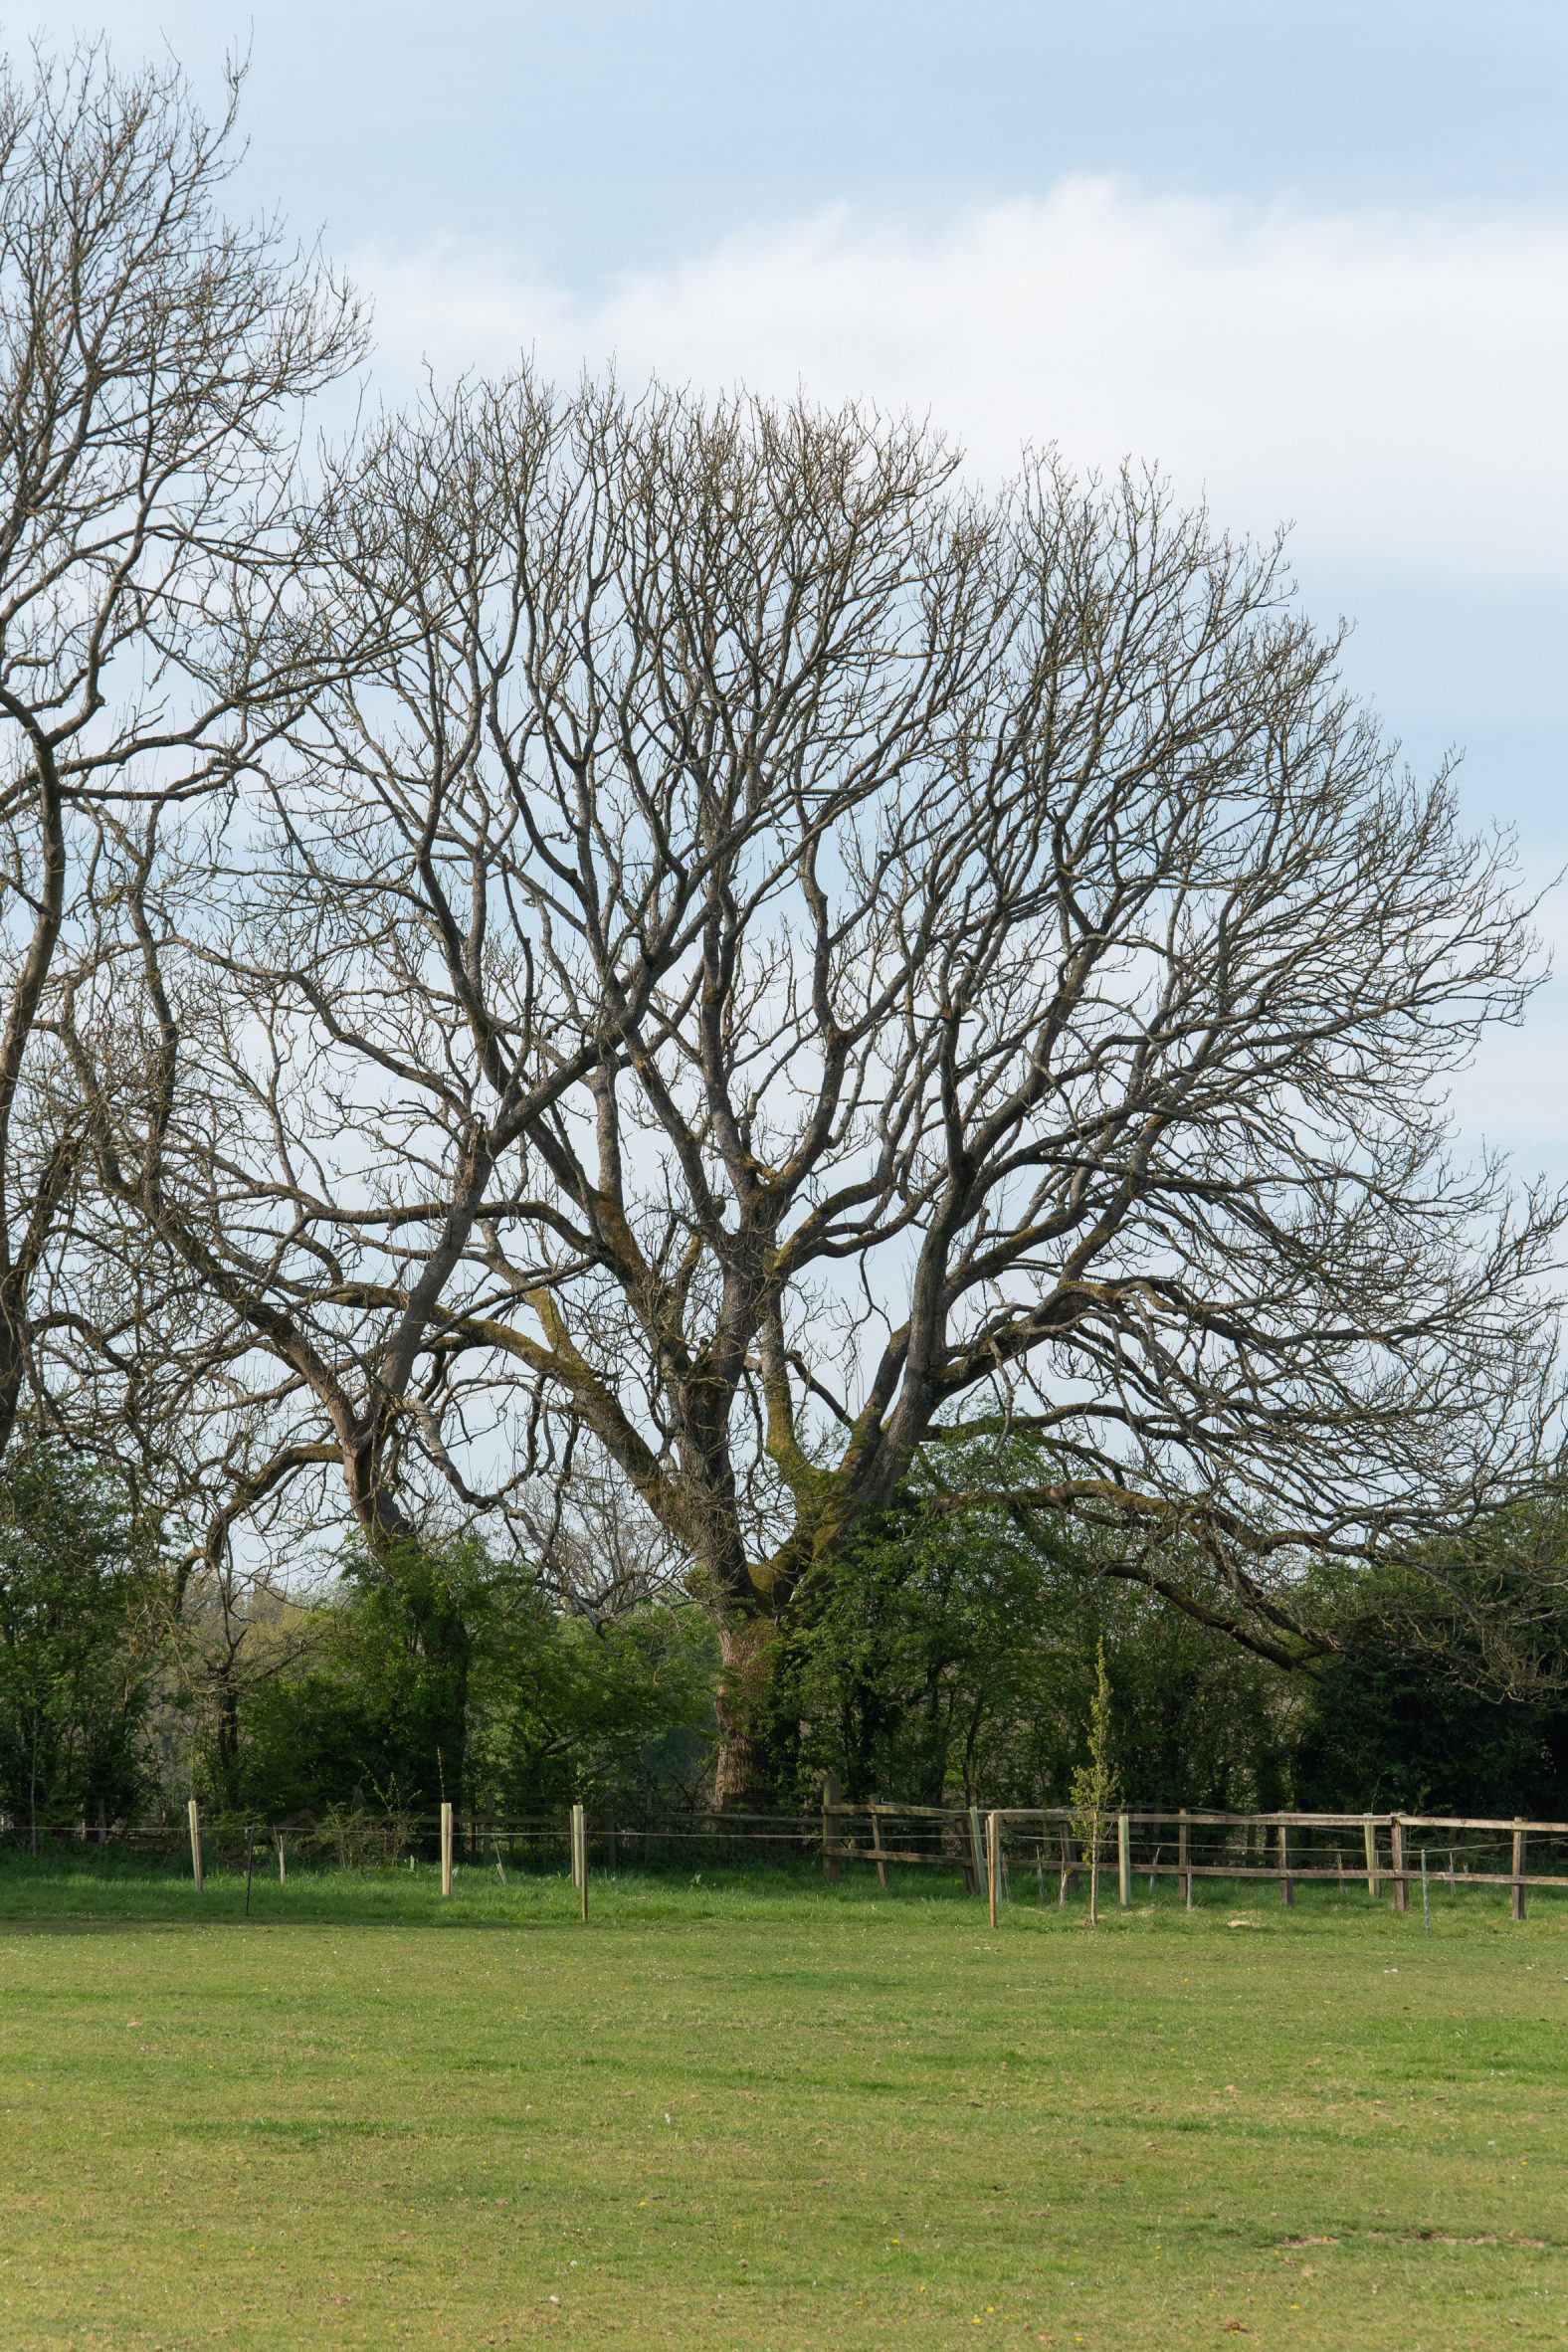 Photograph showing ash tree in garden environment